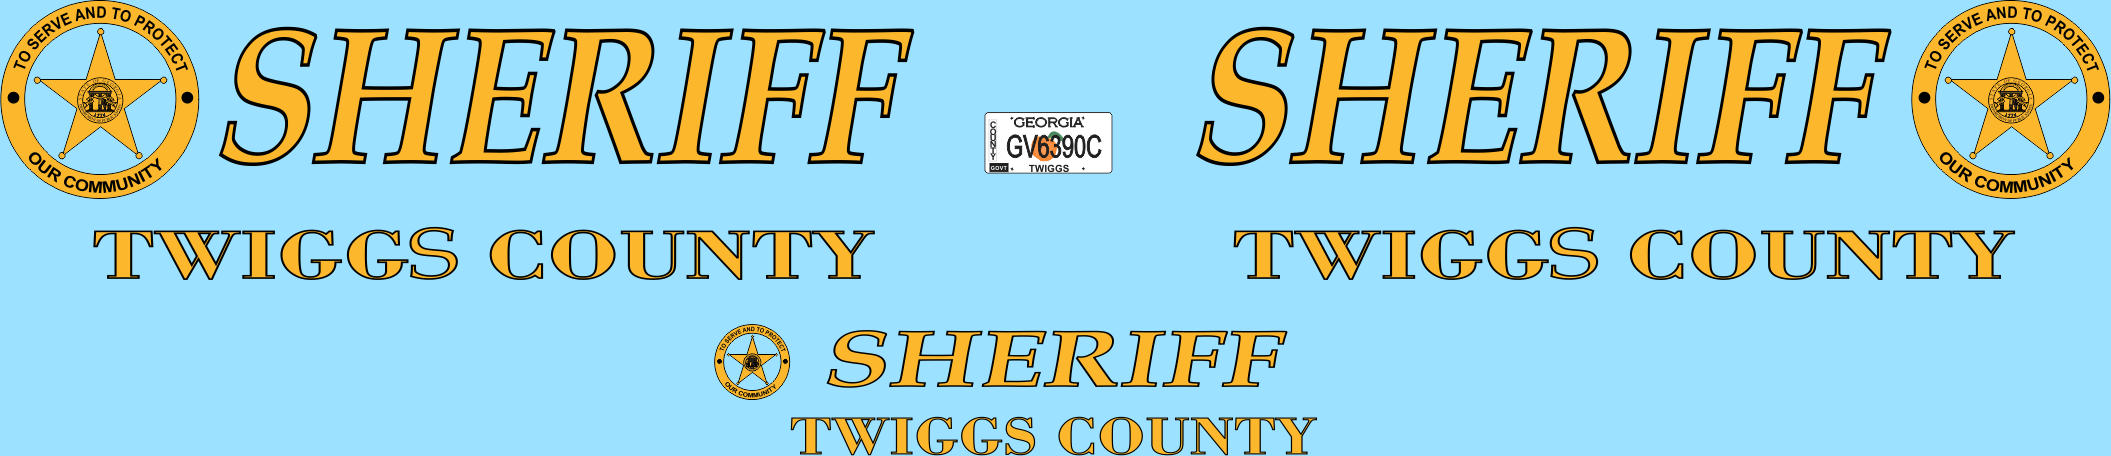 1/24-1/25 Twiggs County, Georgia Sheriff's Department waterslide decals